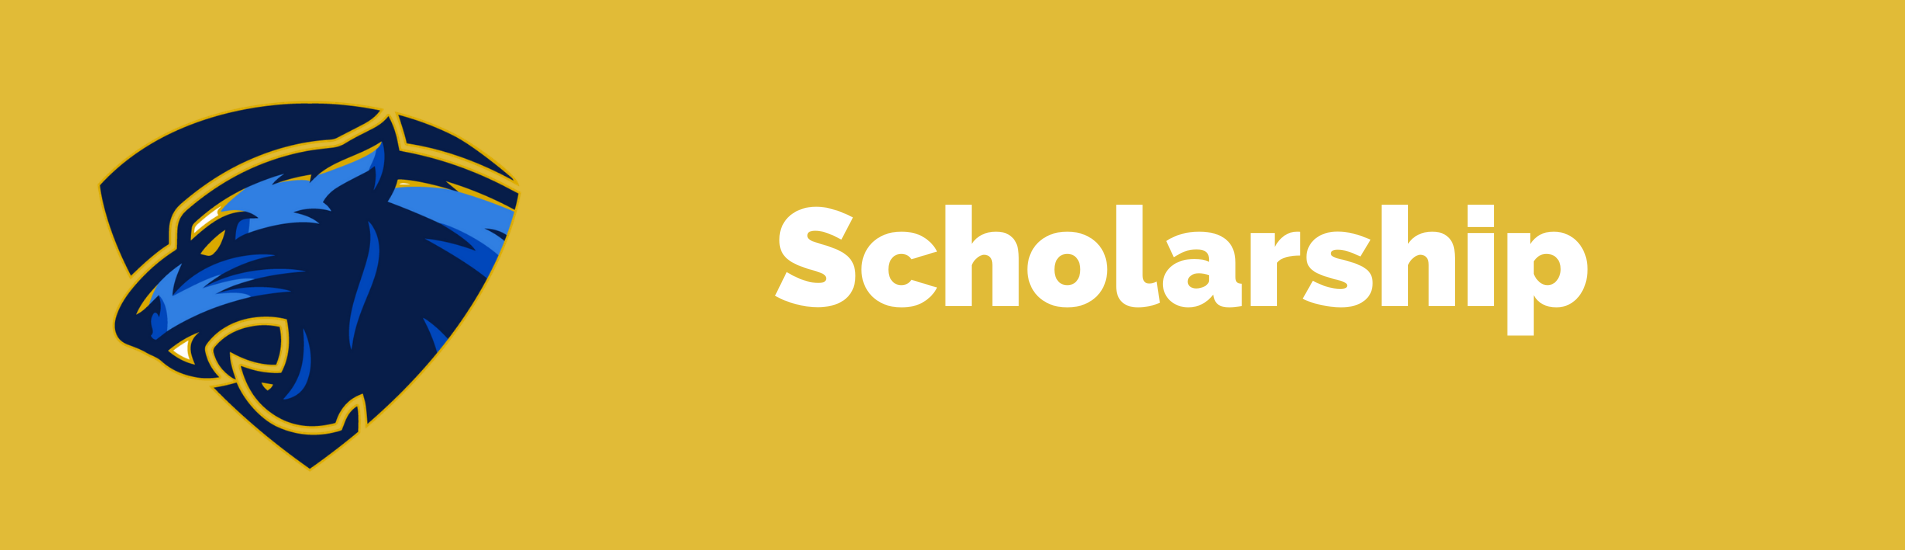 Scholarship value banner